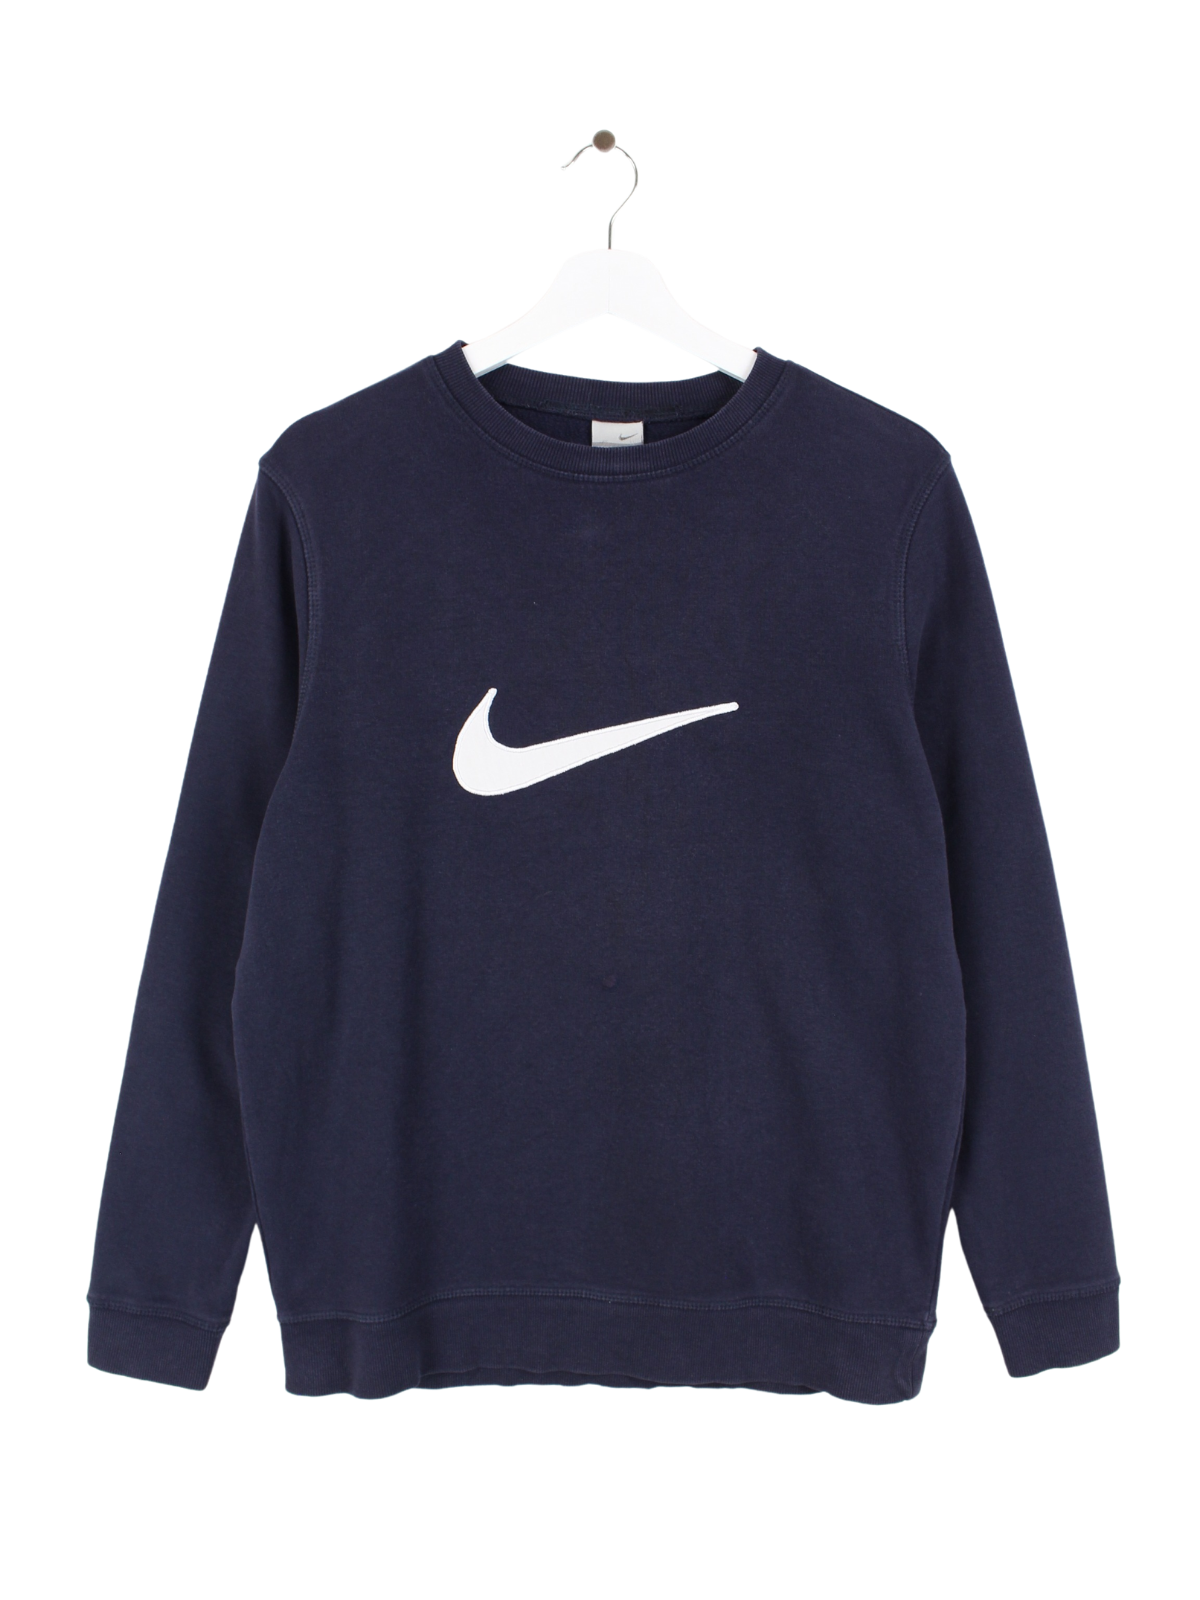 Nike Center Swoosh Sweater Blau S